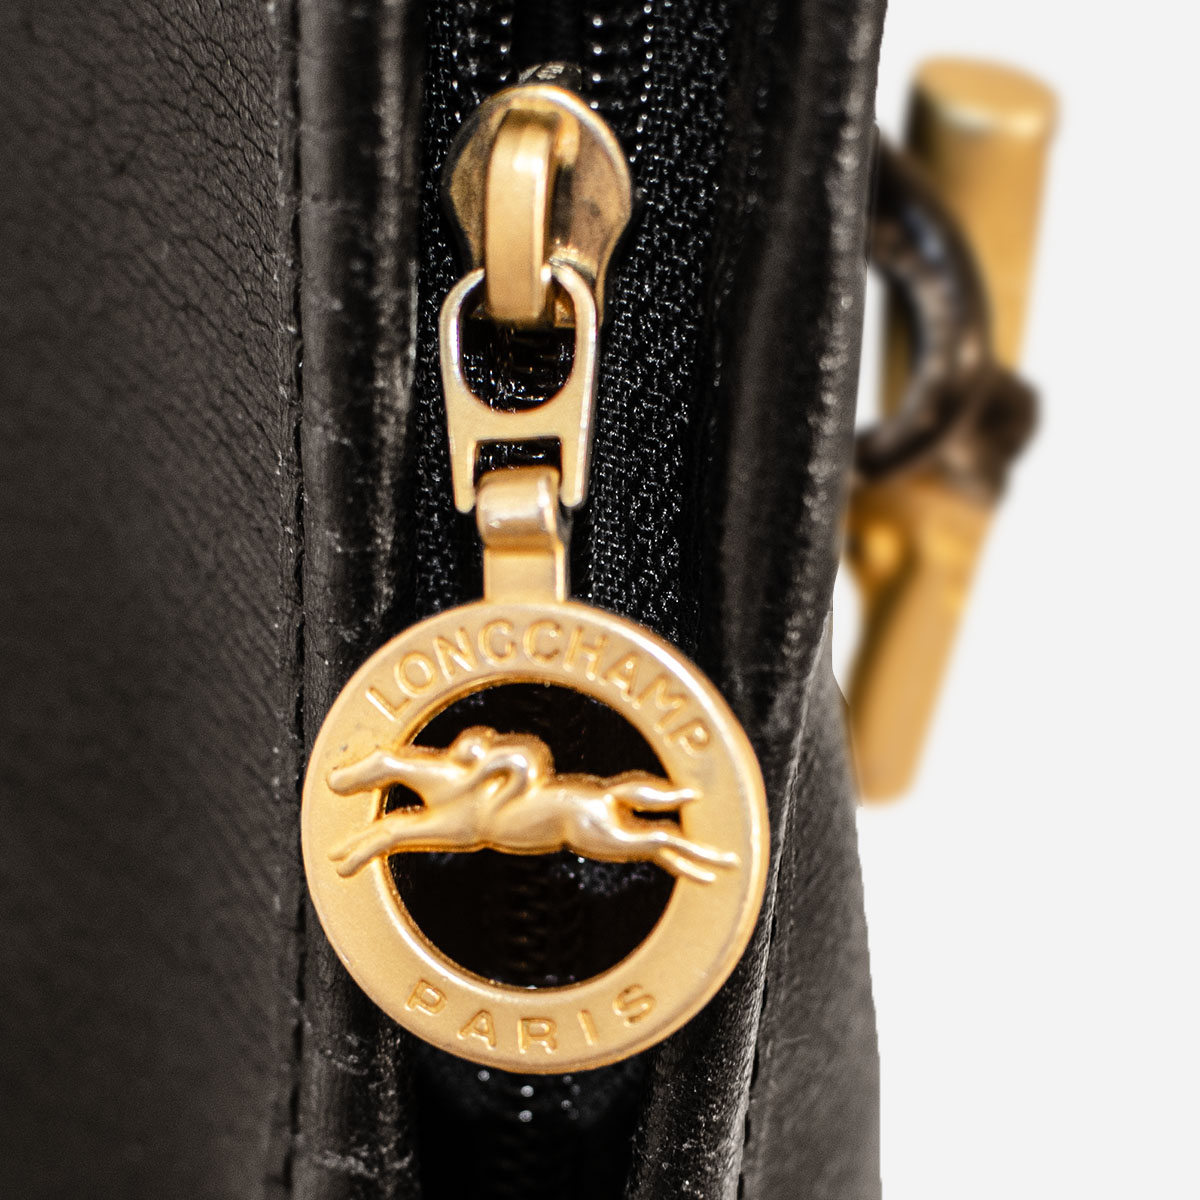 Longchamp metal logo tag zipper pull